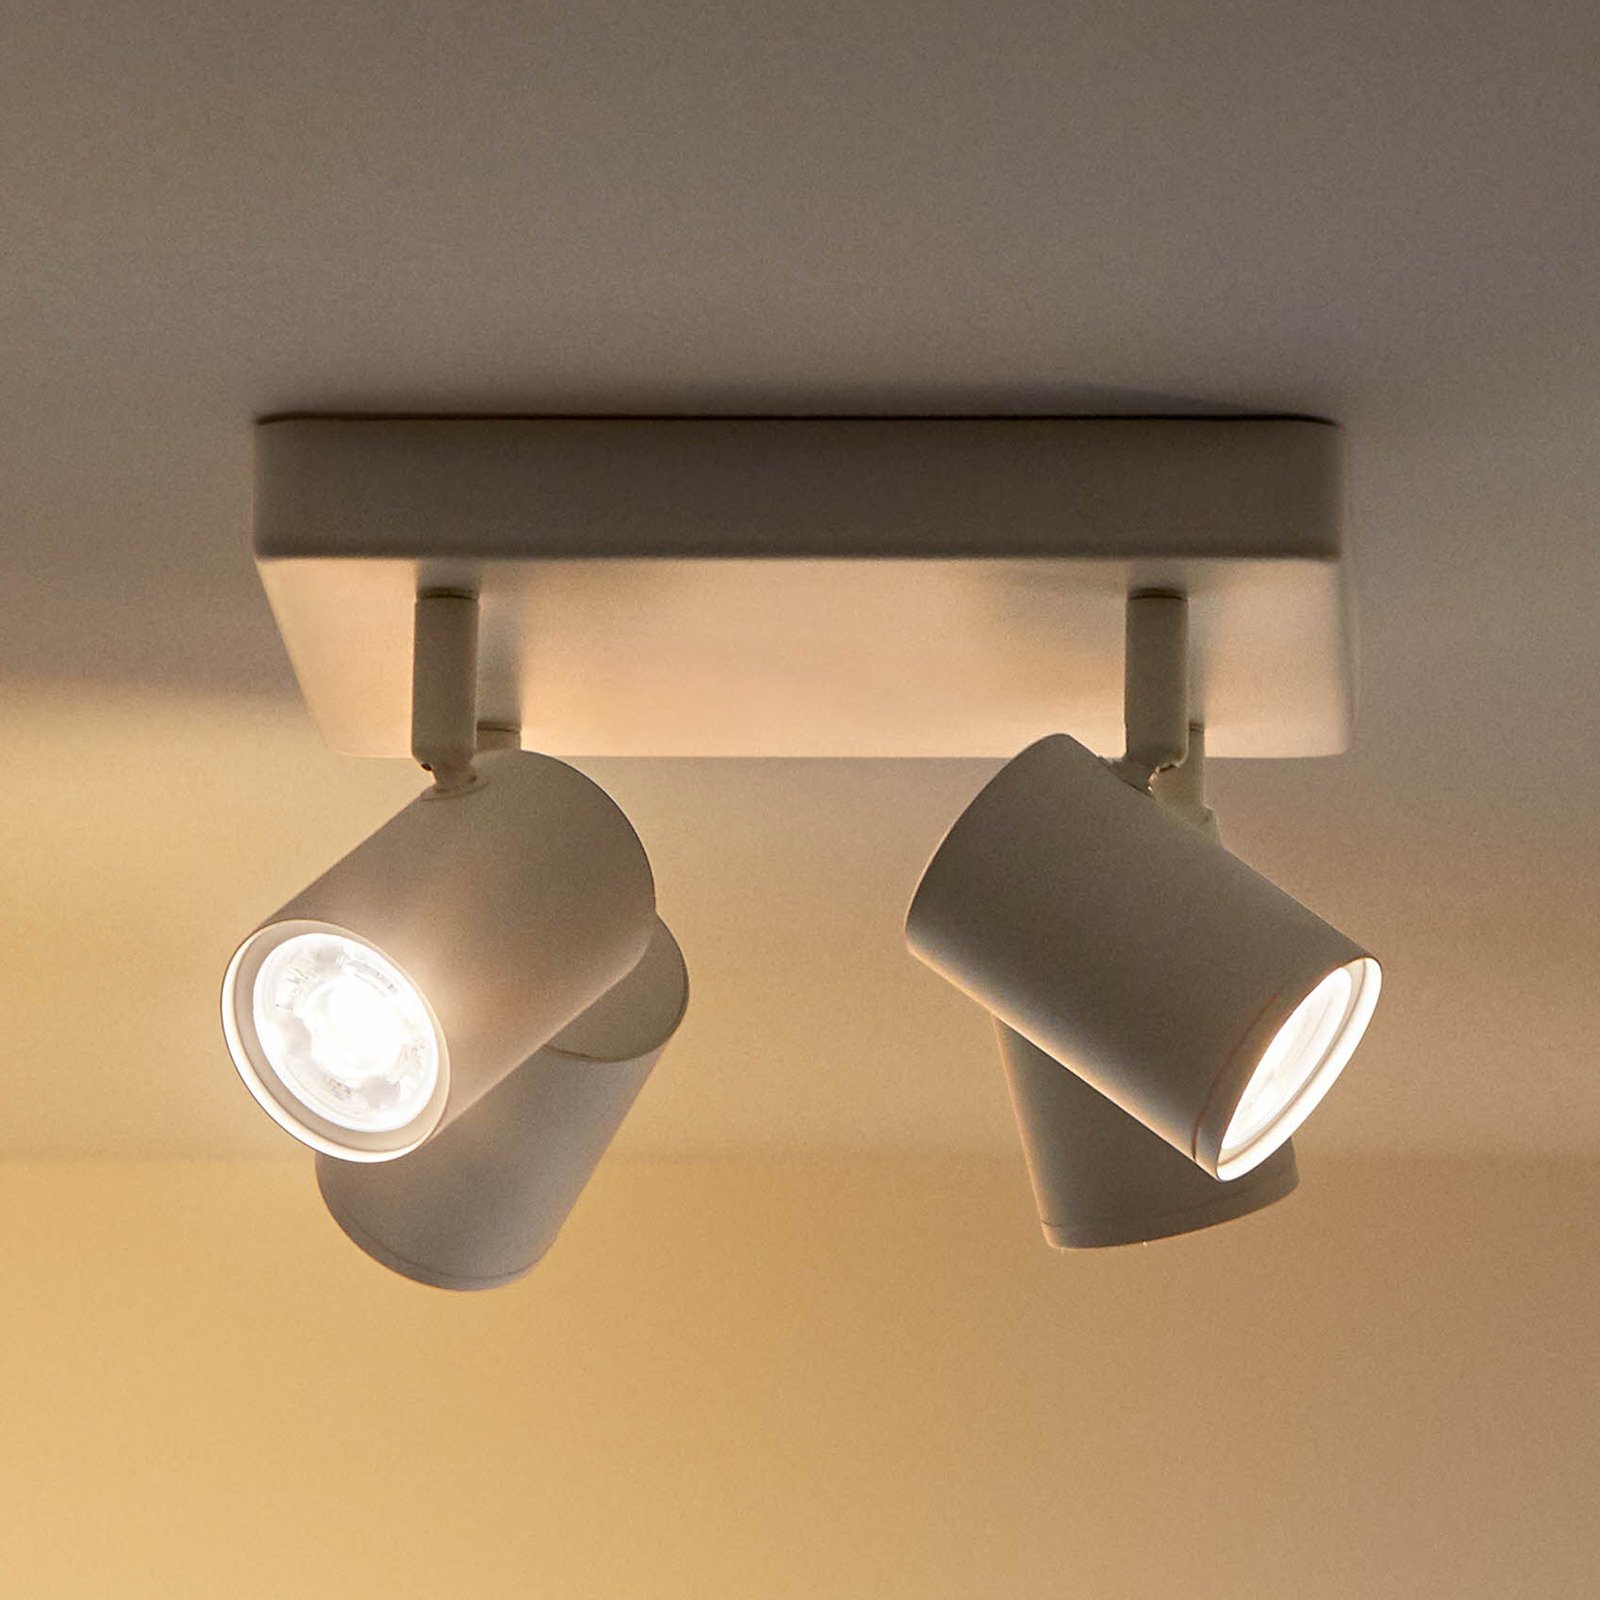 WiZ spot plafond LED Imageo, 4 lampes blanc